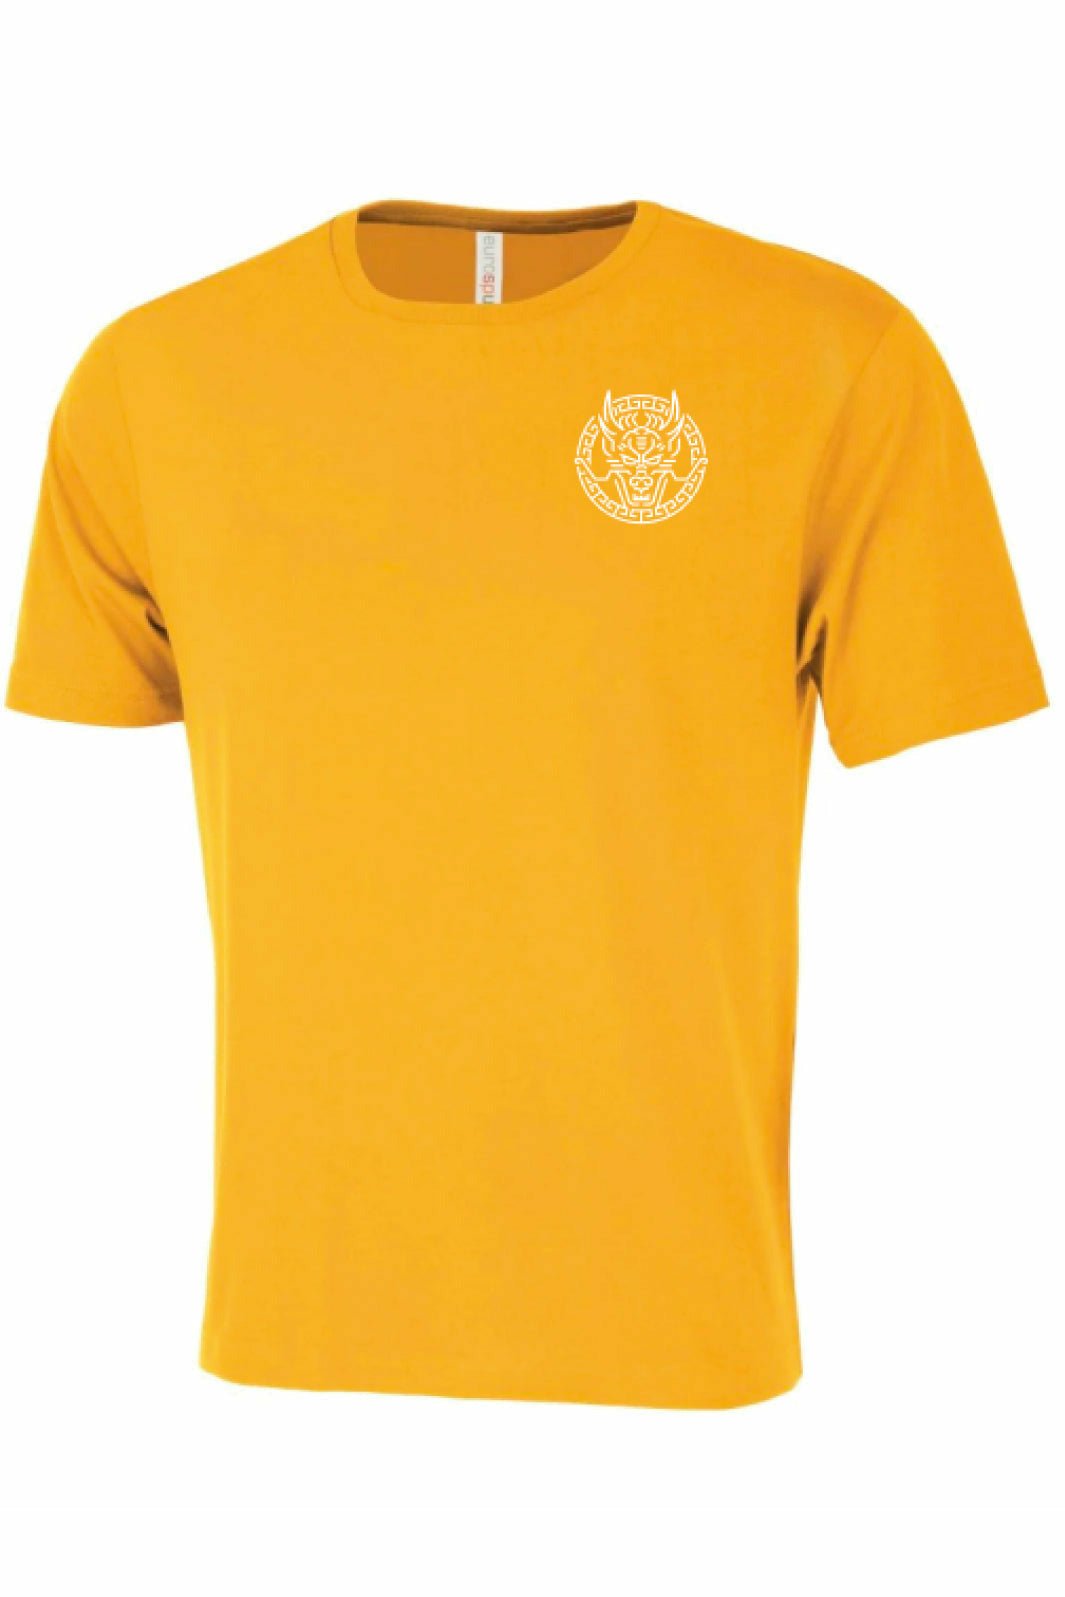 TNPC SLP Premier T-shirt (Front Logo Only) - Oddball Workshop